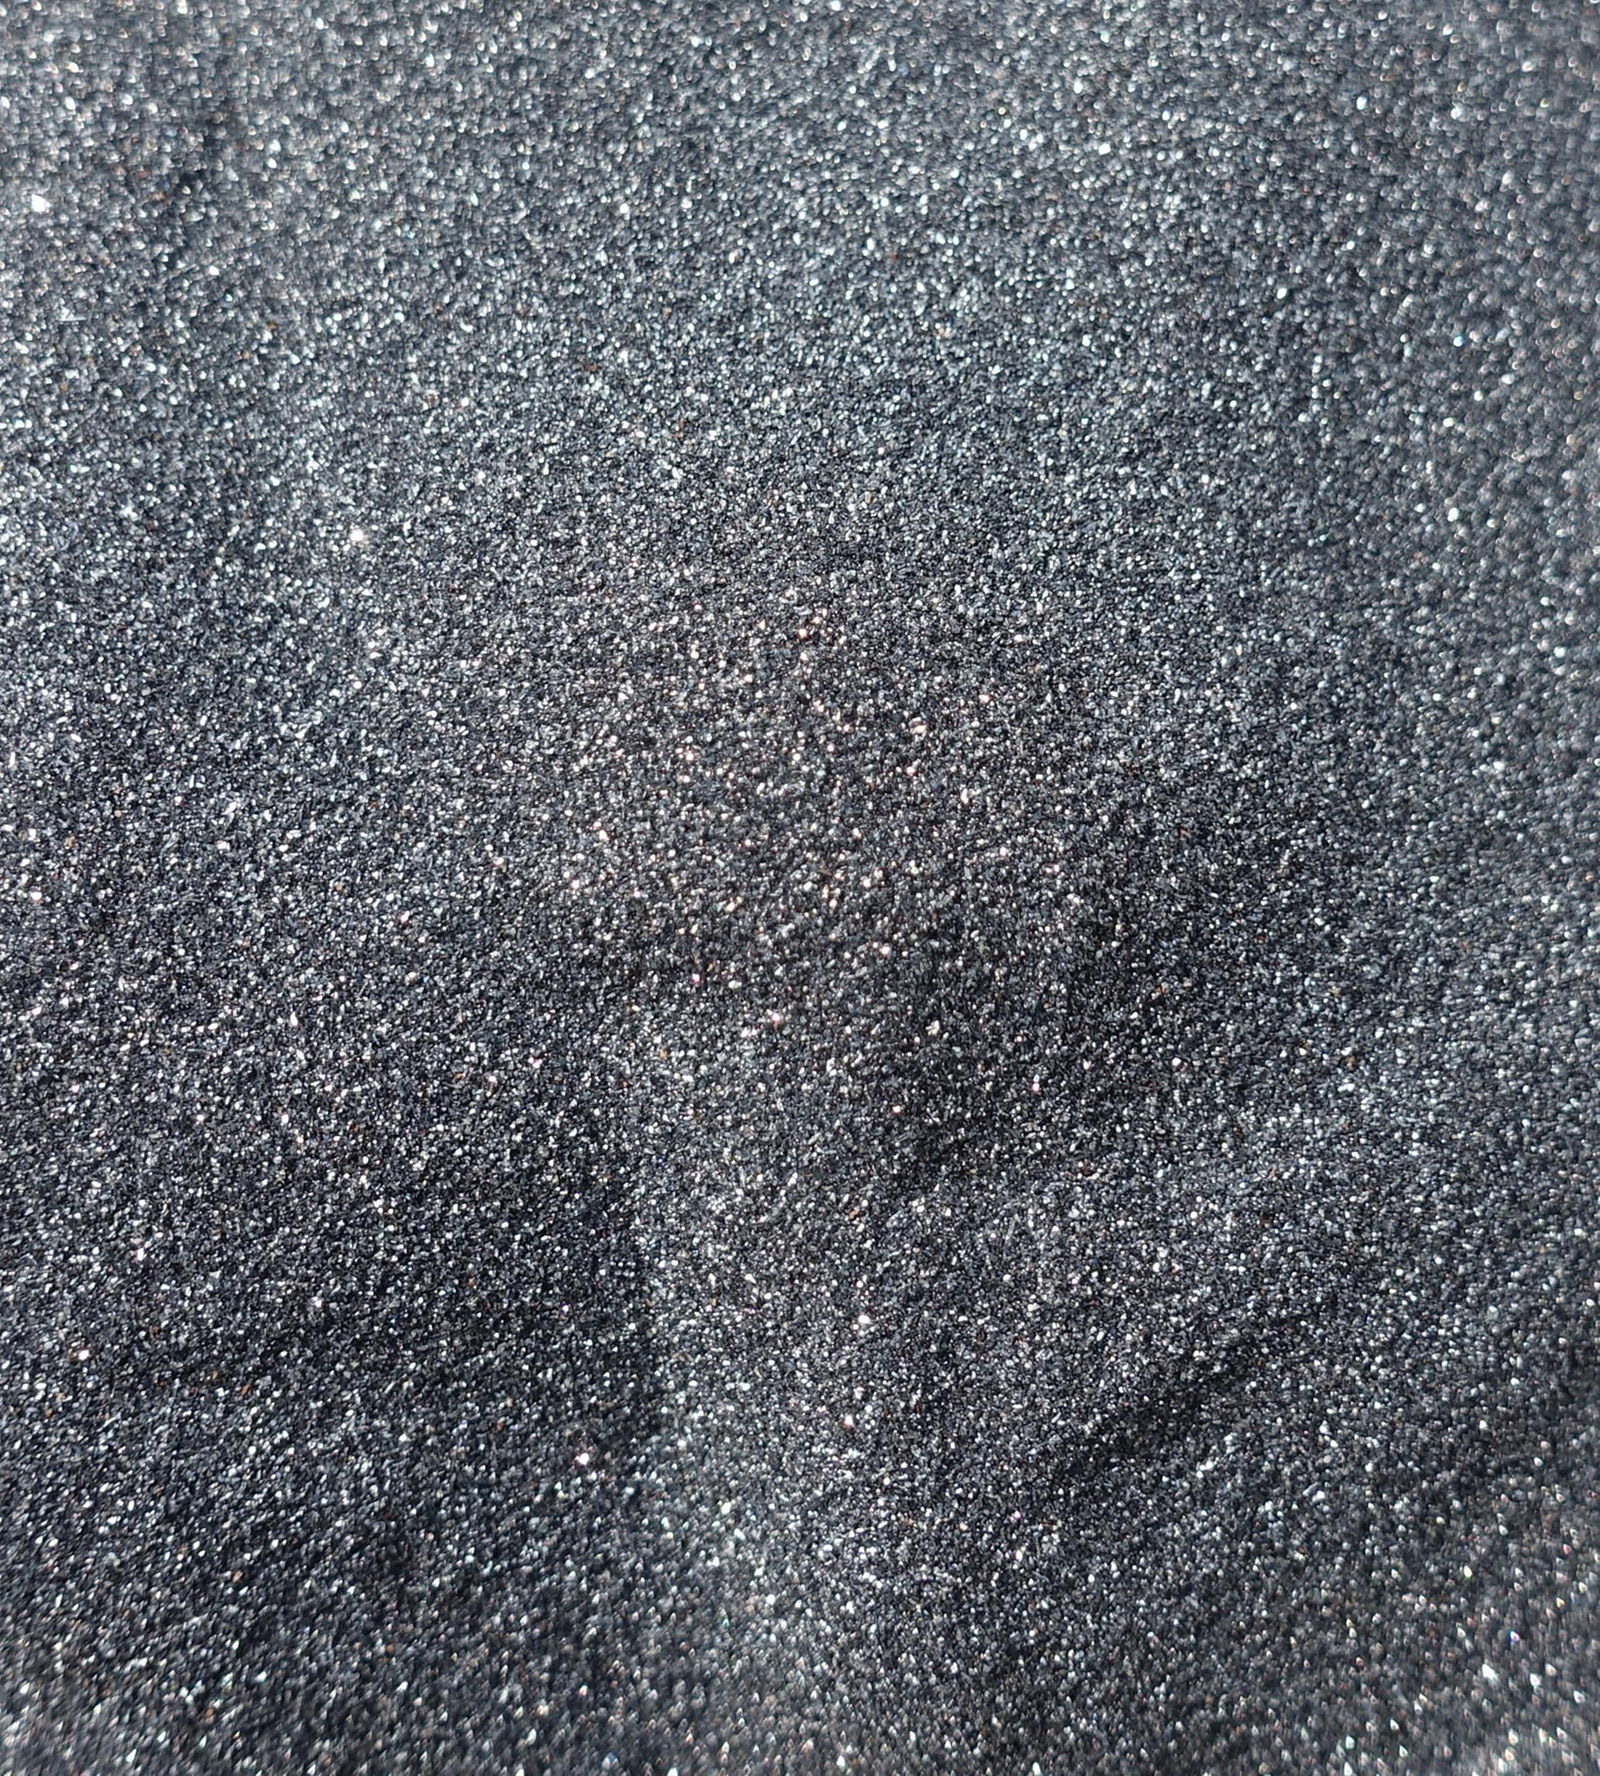 Black silicon cargbide